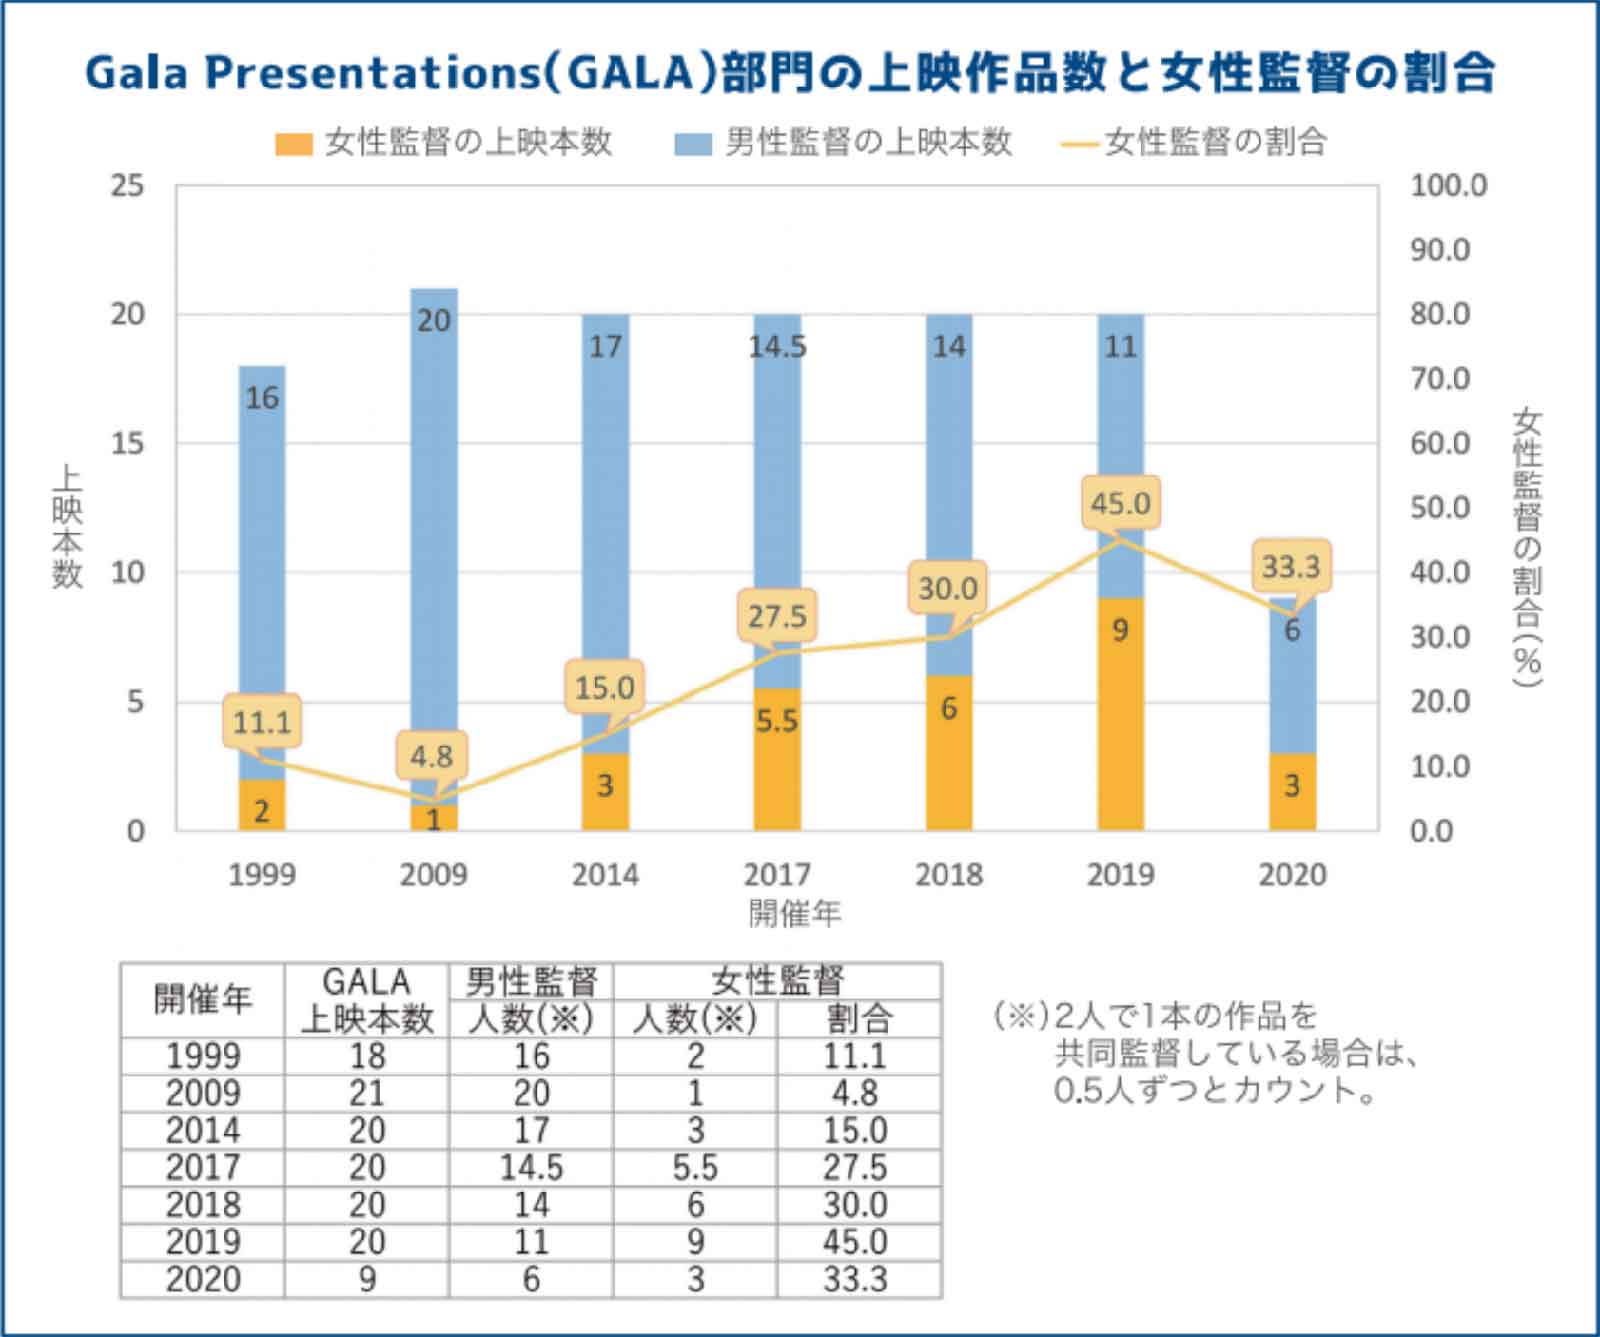 Gala Presentations（GALA）部門の上映作品数と女性監督の割合